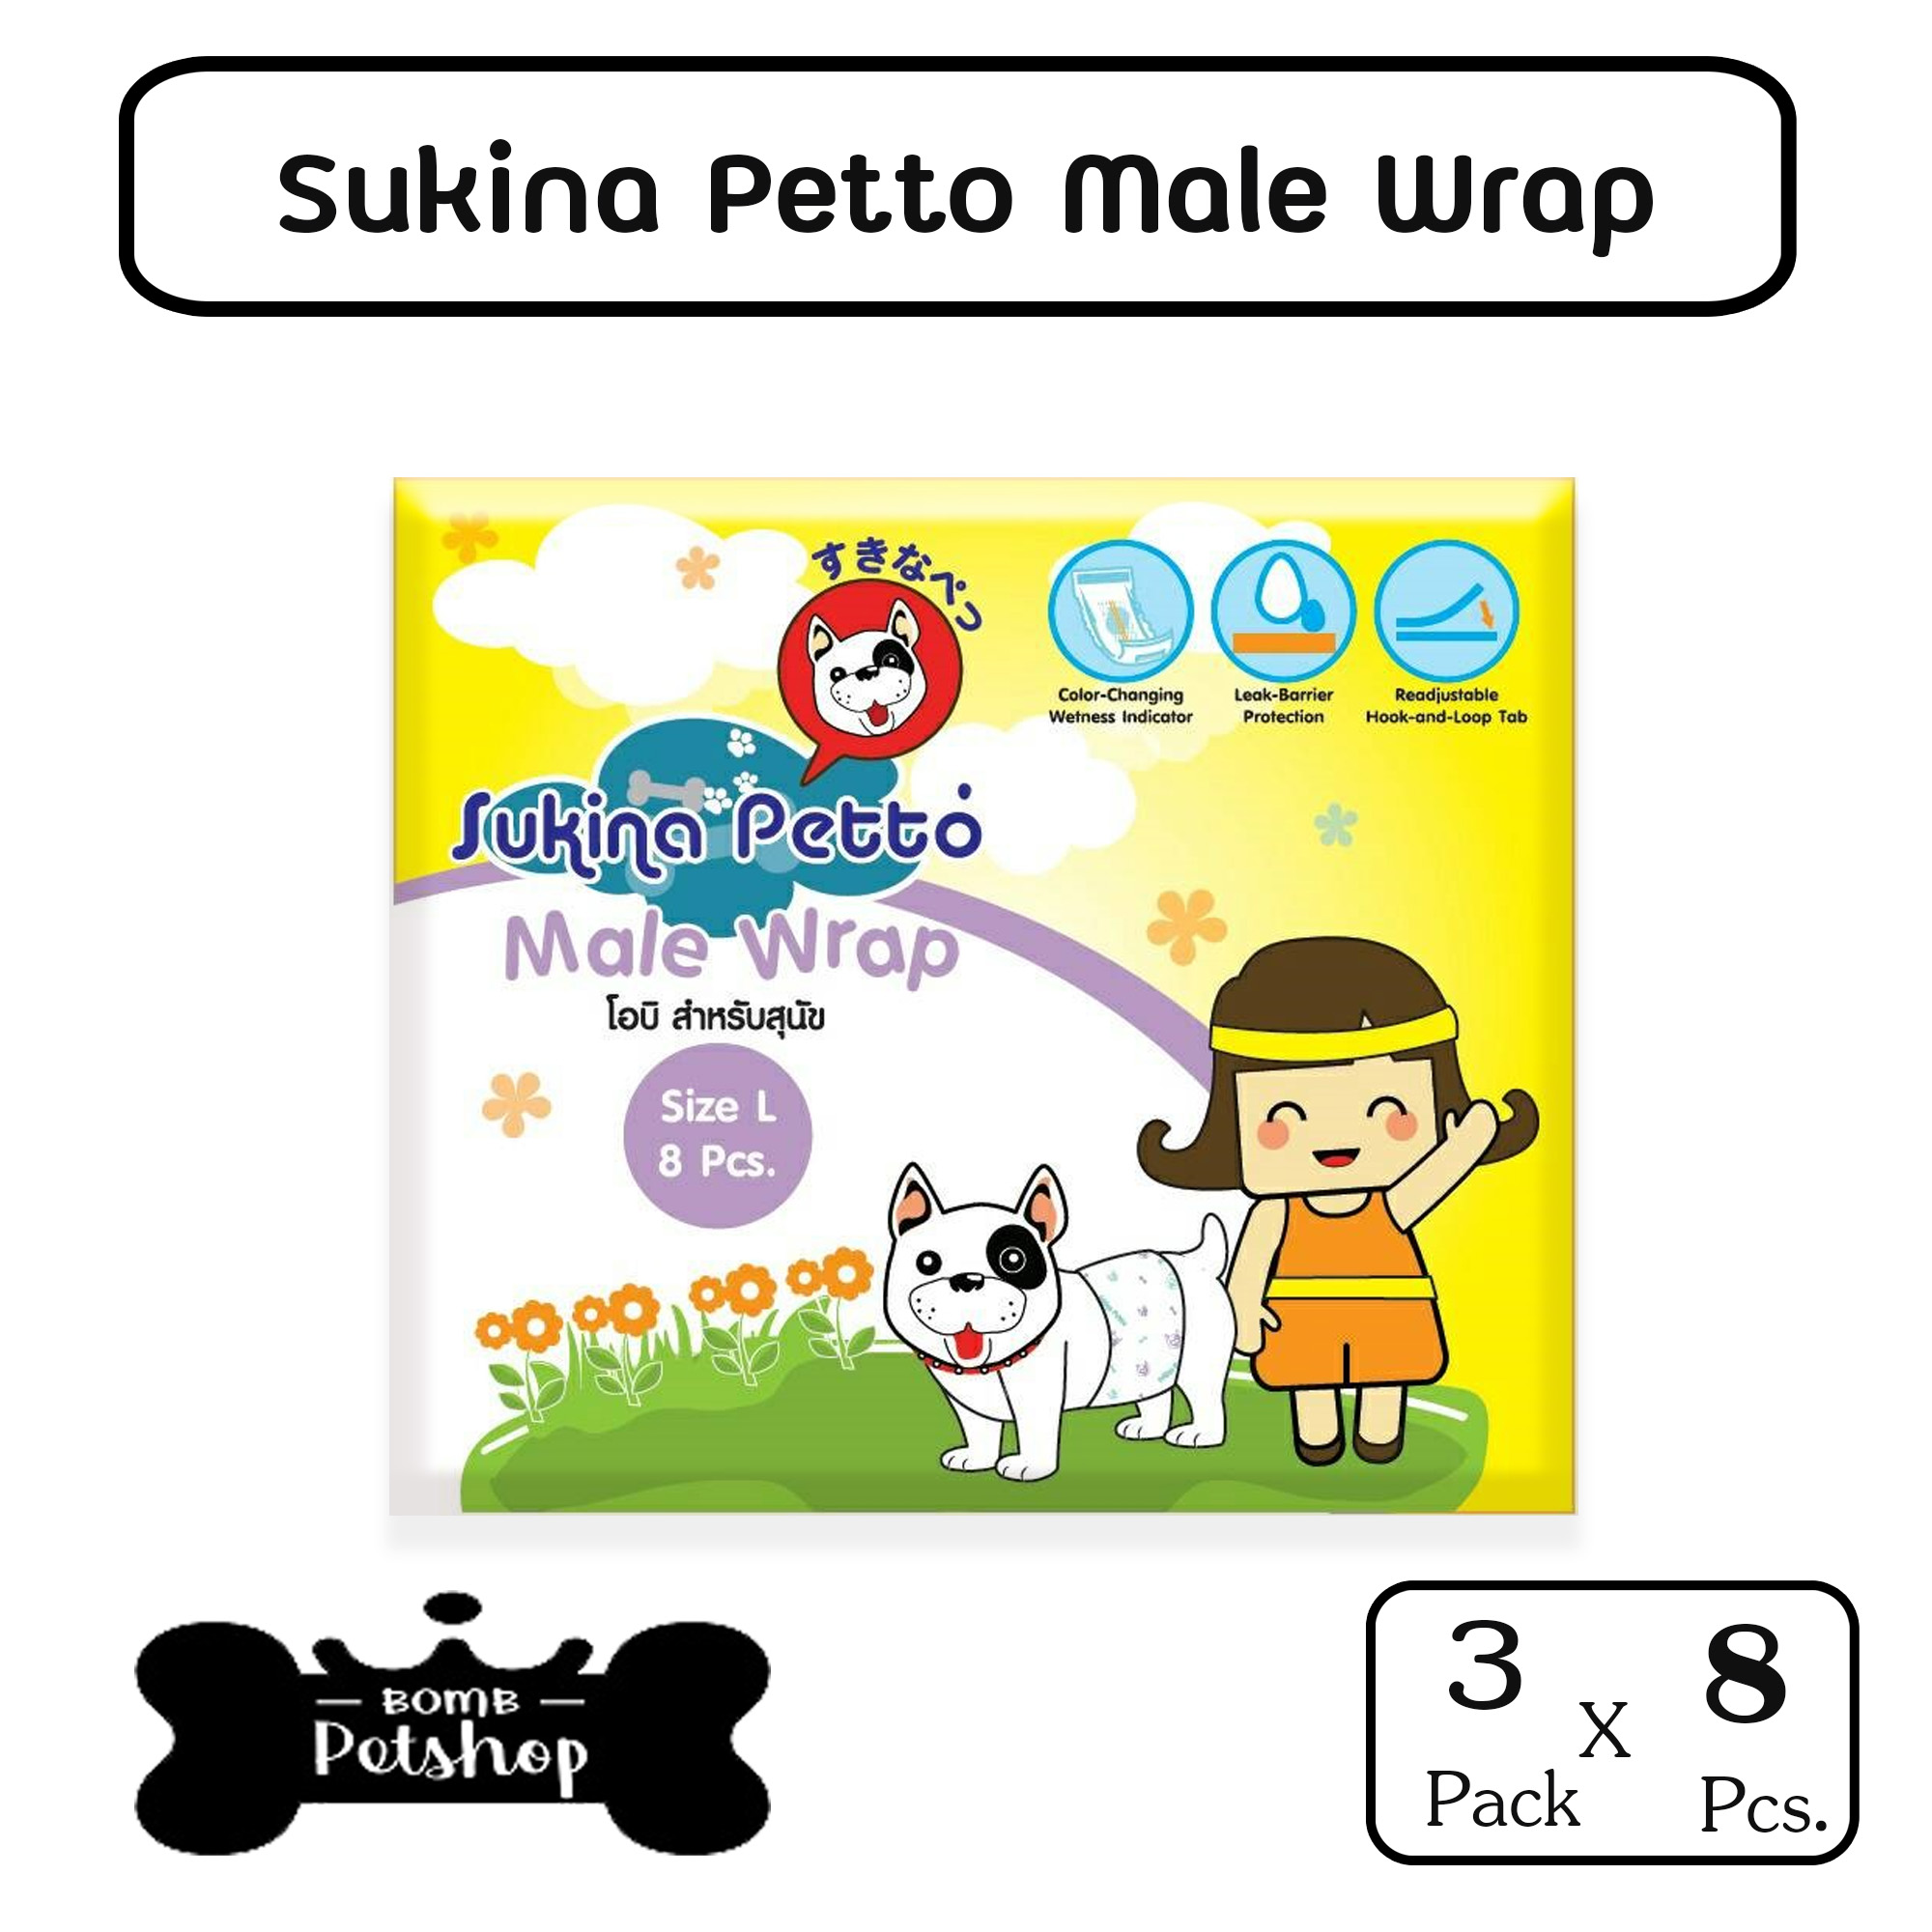 Sukina Petto Male Wrap โอบิ สำหรับสุนัข ขนาด L จำนวน 8 ชิ้น x 3 ห่อ